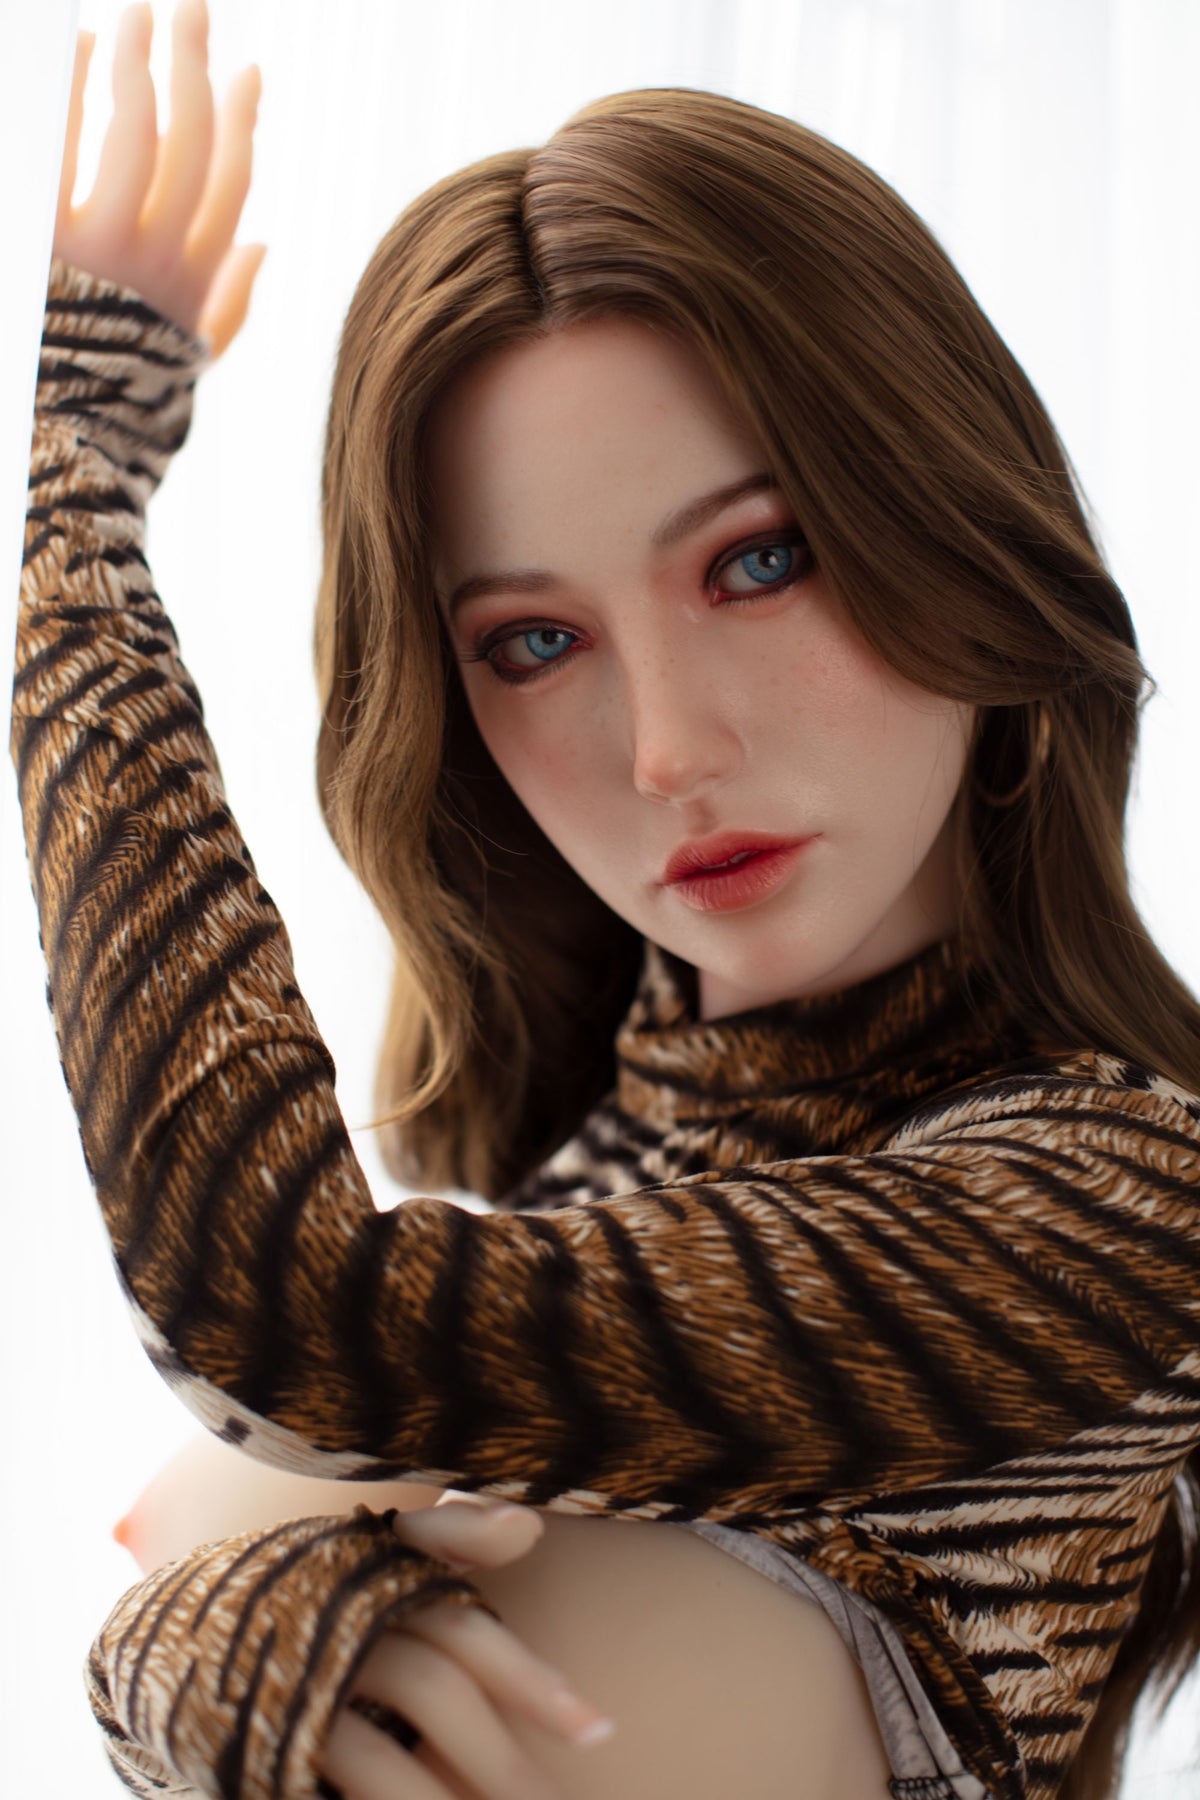 160cm Jessie D-CUP Silicone sex dolls Premium quality realistic sex doll